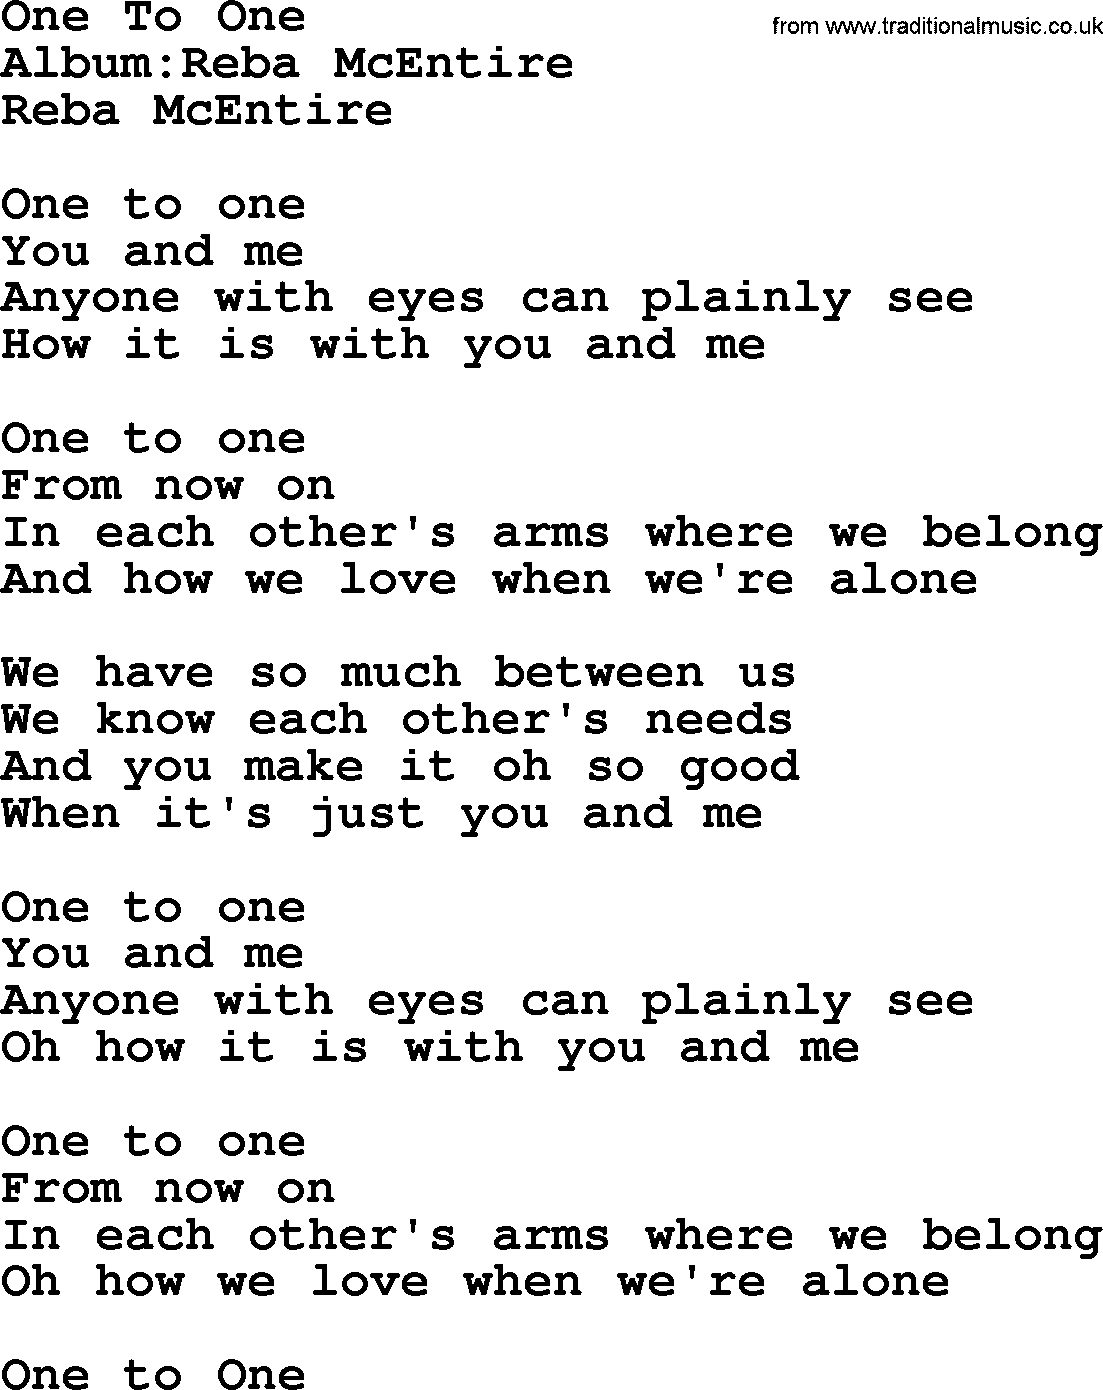 Reba McEntire song: One To One lyrics